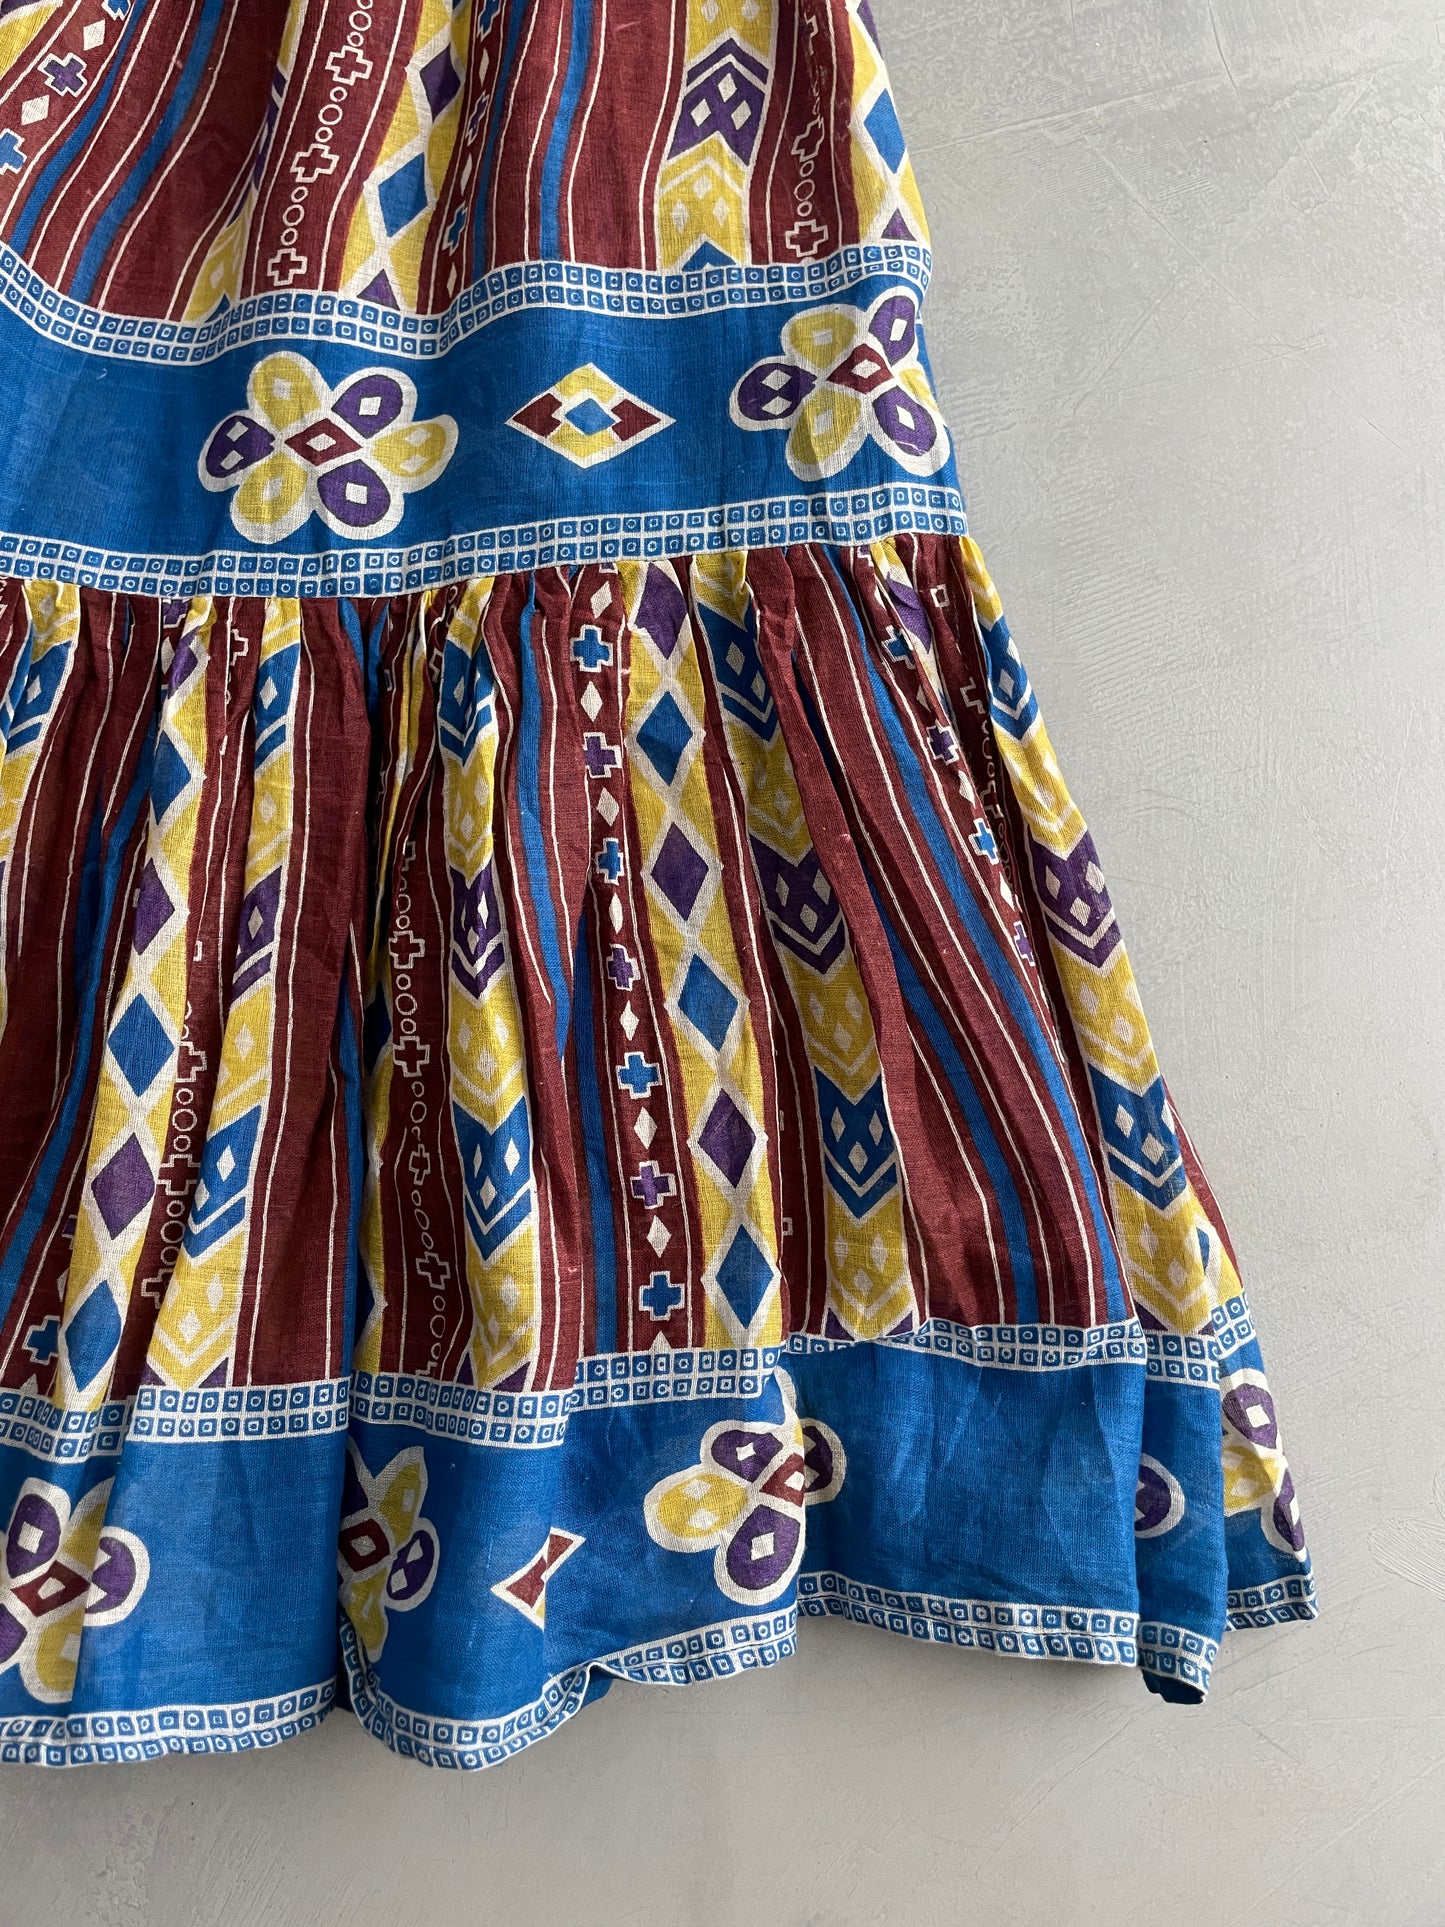 70's Cotton Skirt [W6-10]